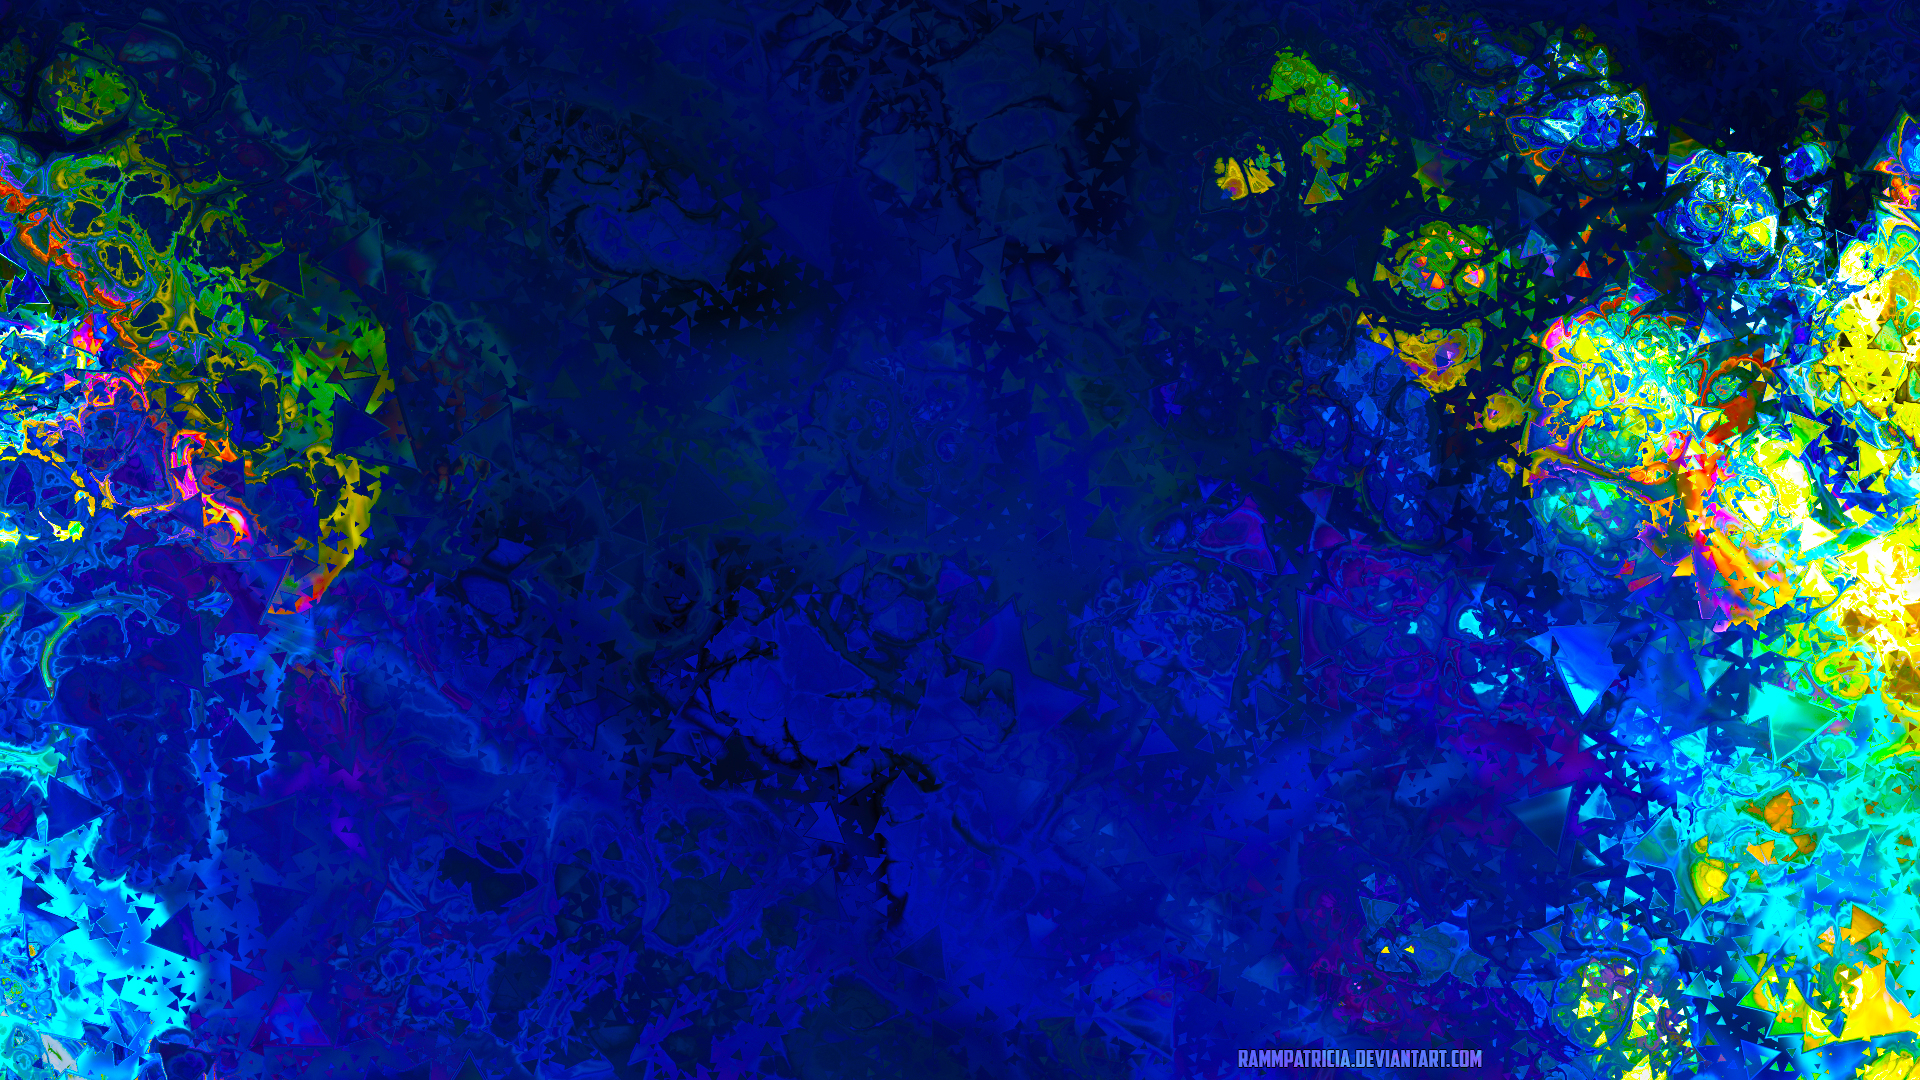 General 1920x1080 abstract digital art RammPatricia blue